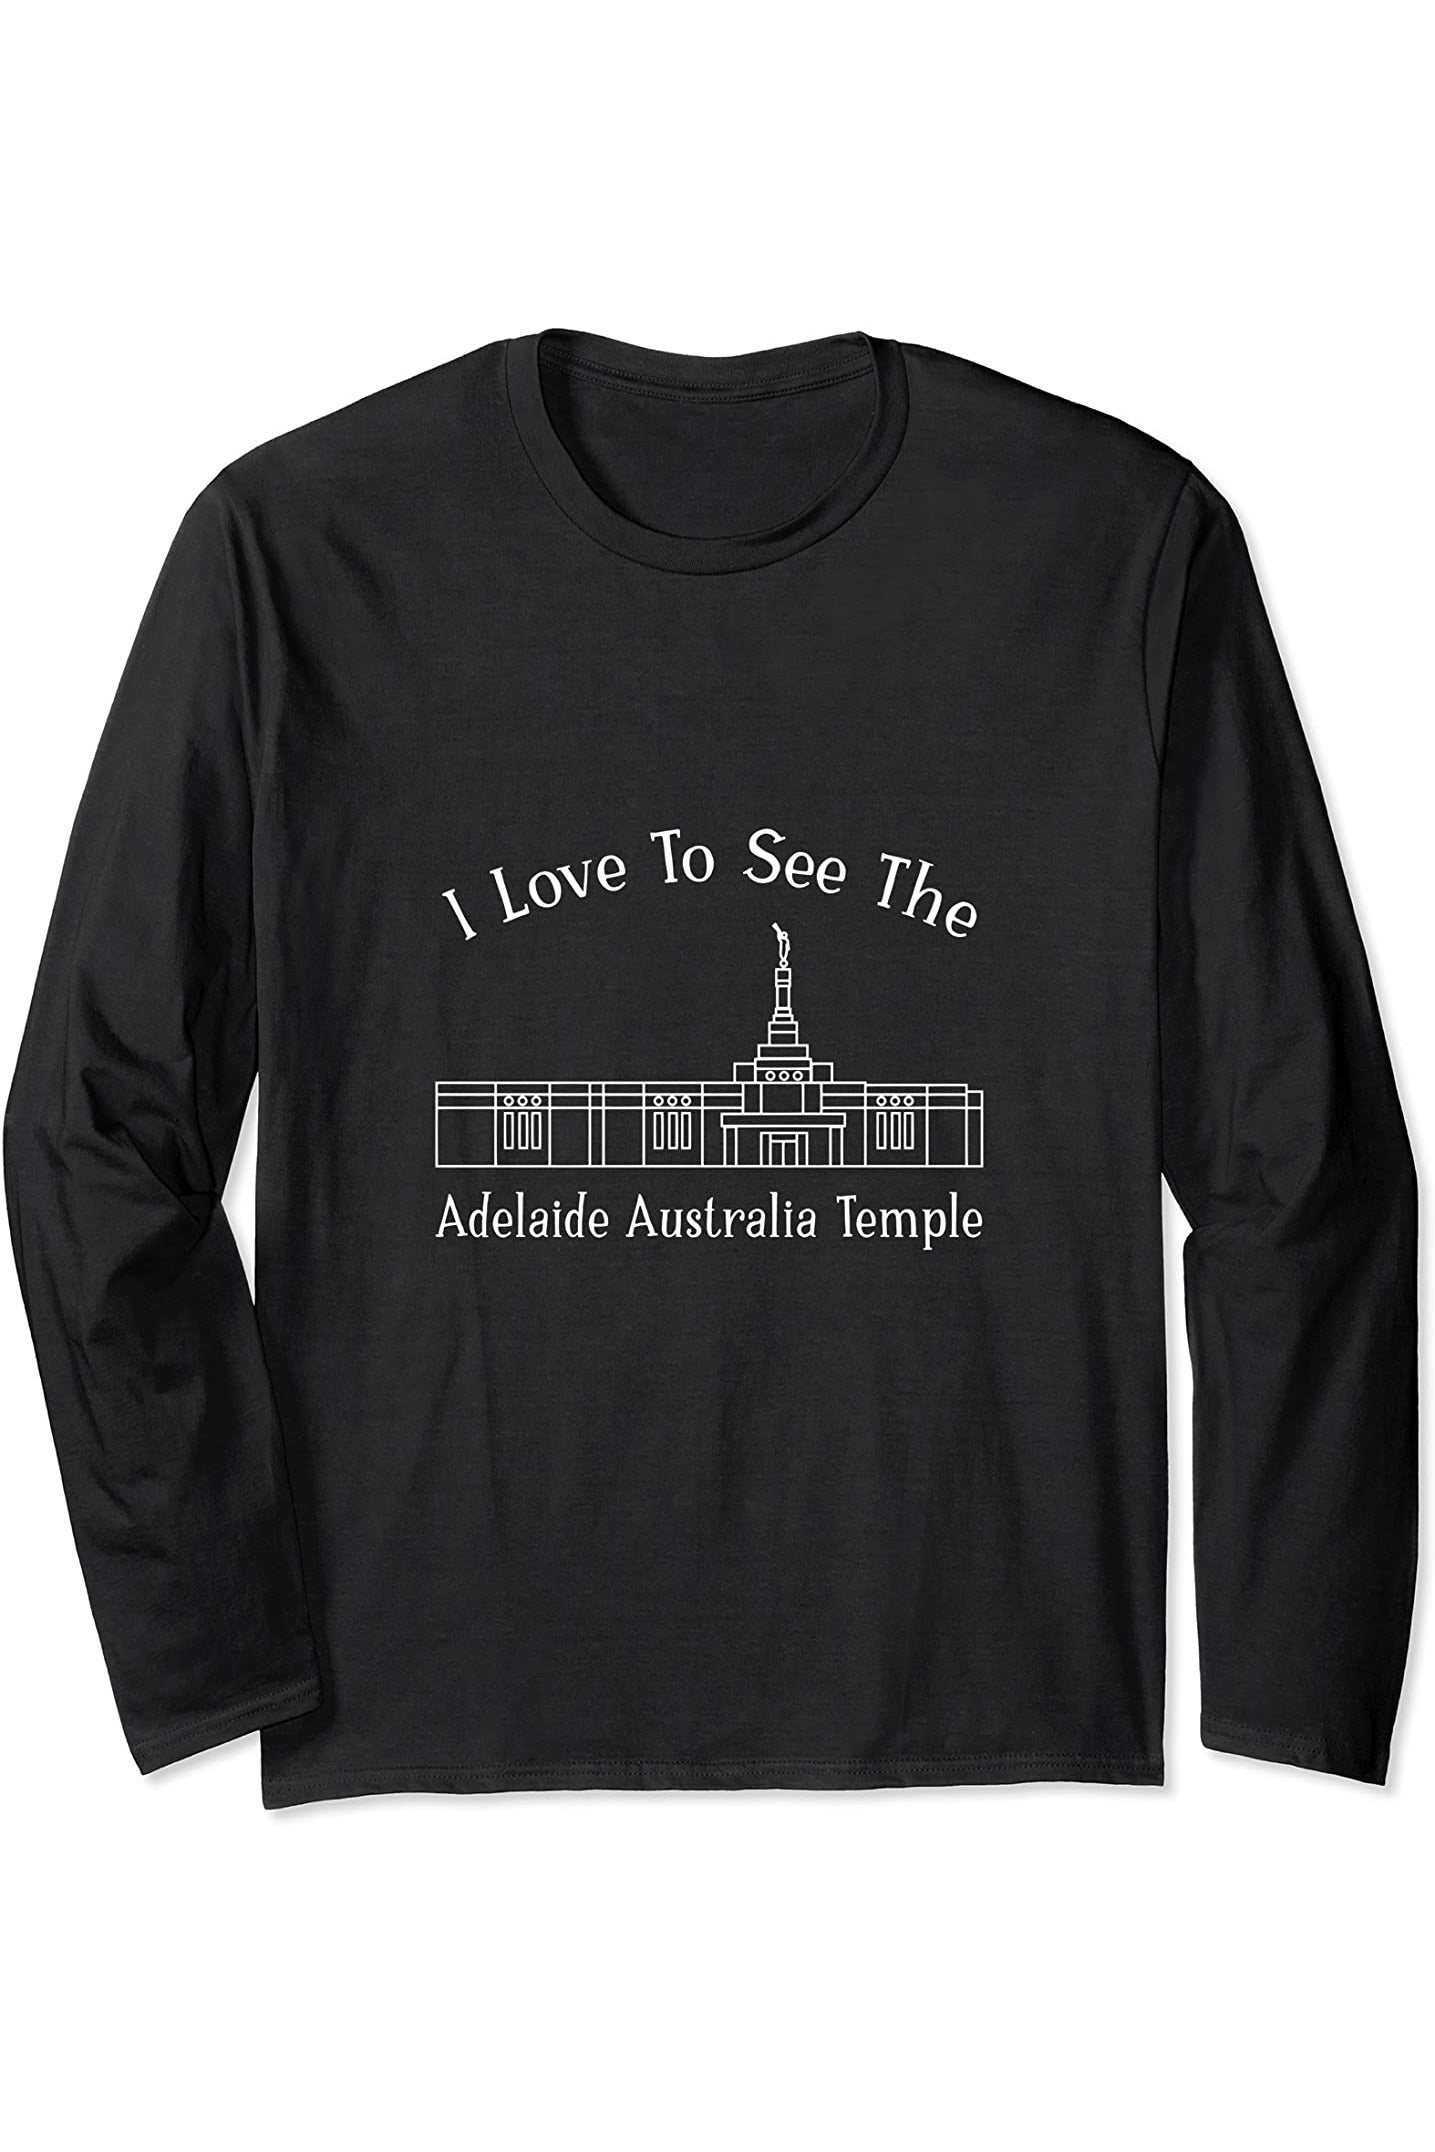 Adelaide Australia Temple Long Sleeve T-Shirt - Happy Style (English) US